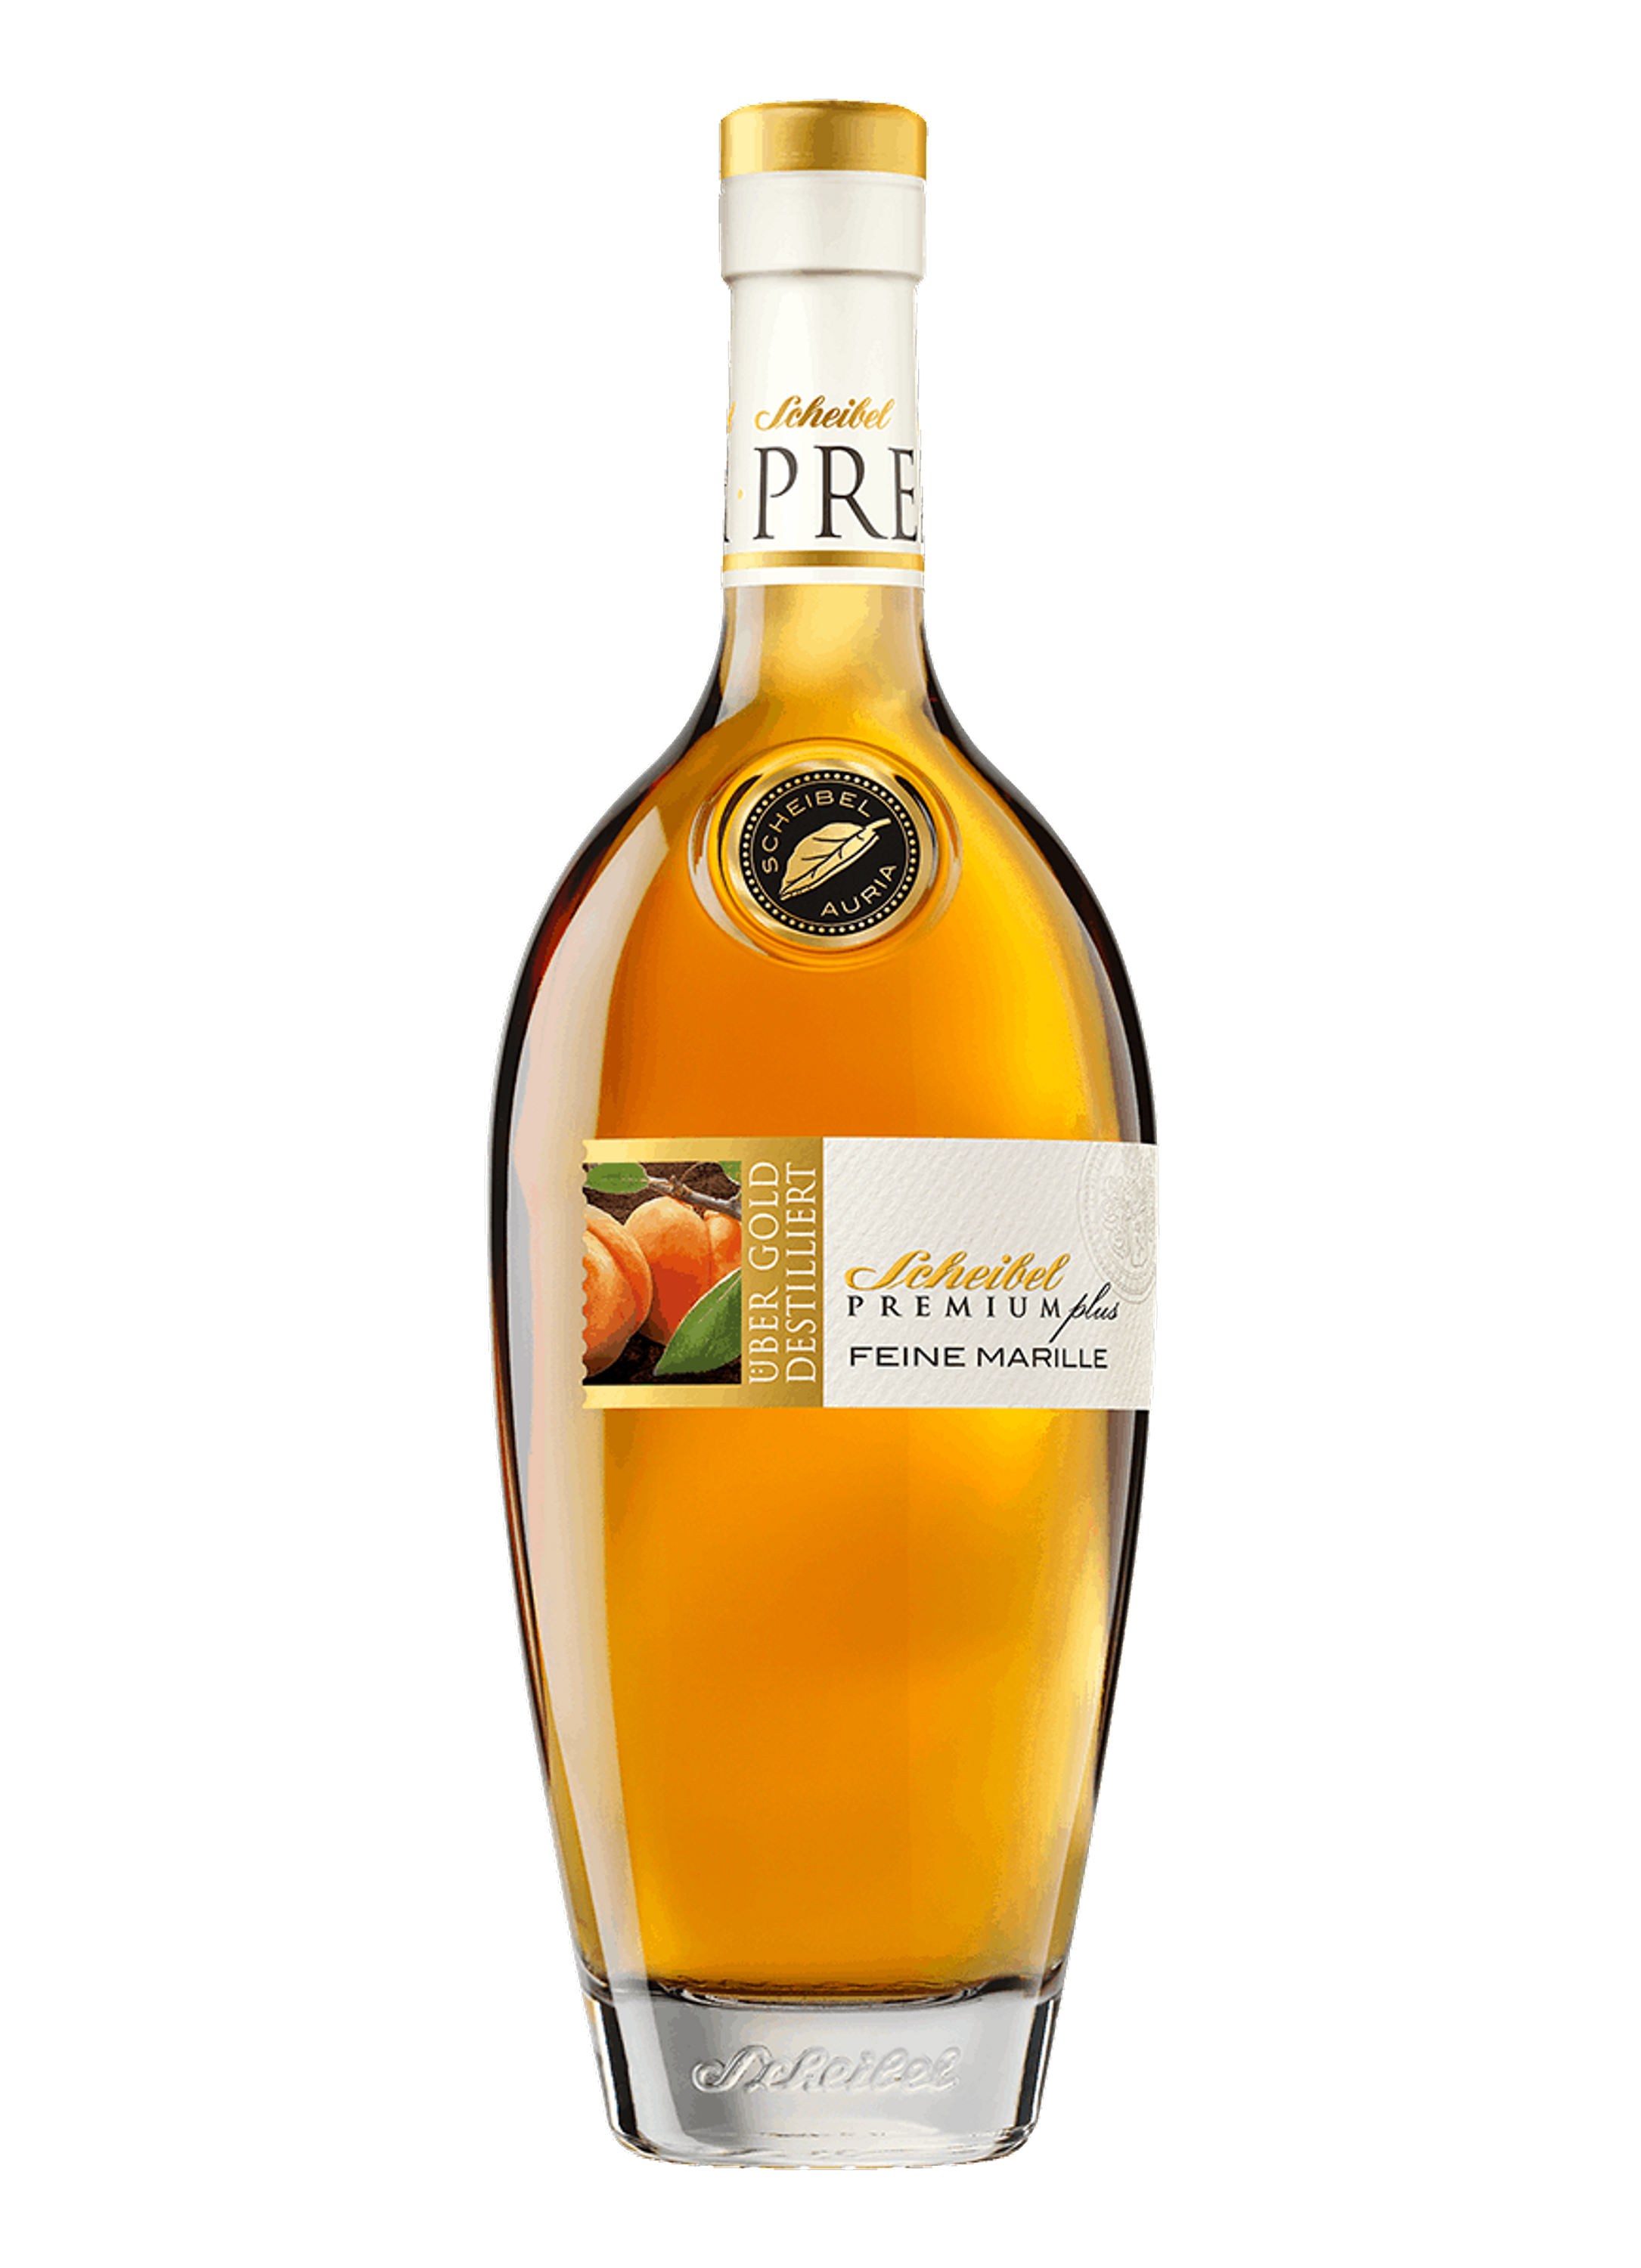 Scheibel Fine Apricot Premium Plus 0,7l, alk. 40 % tilavuudesta